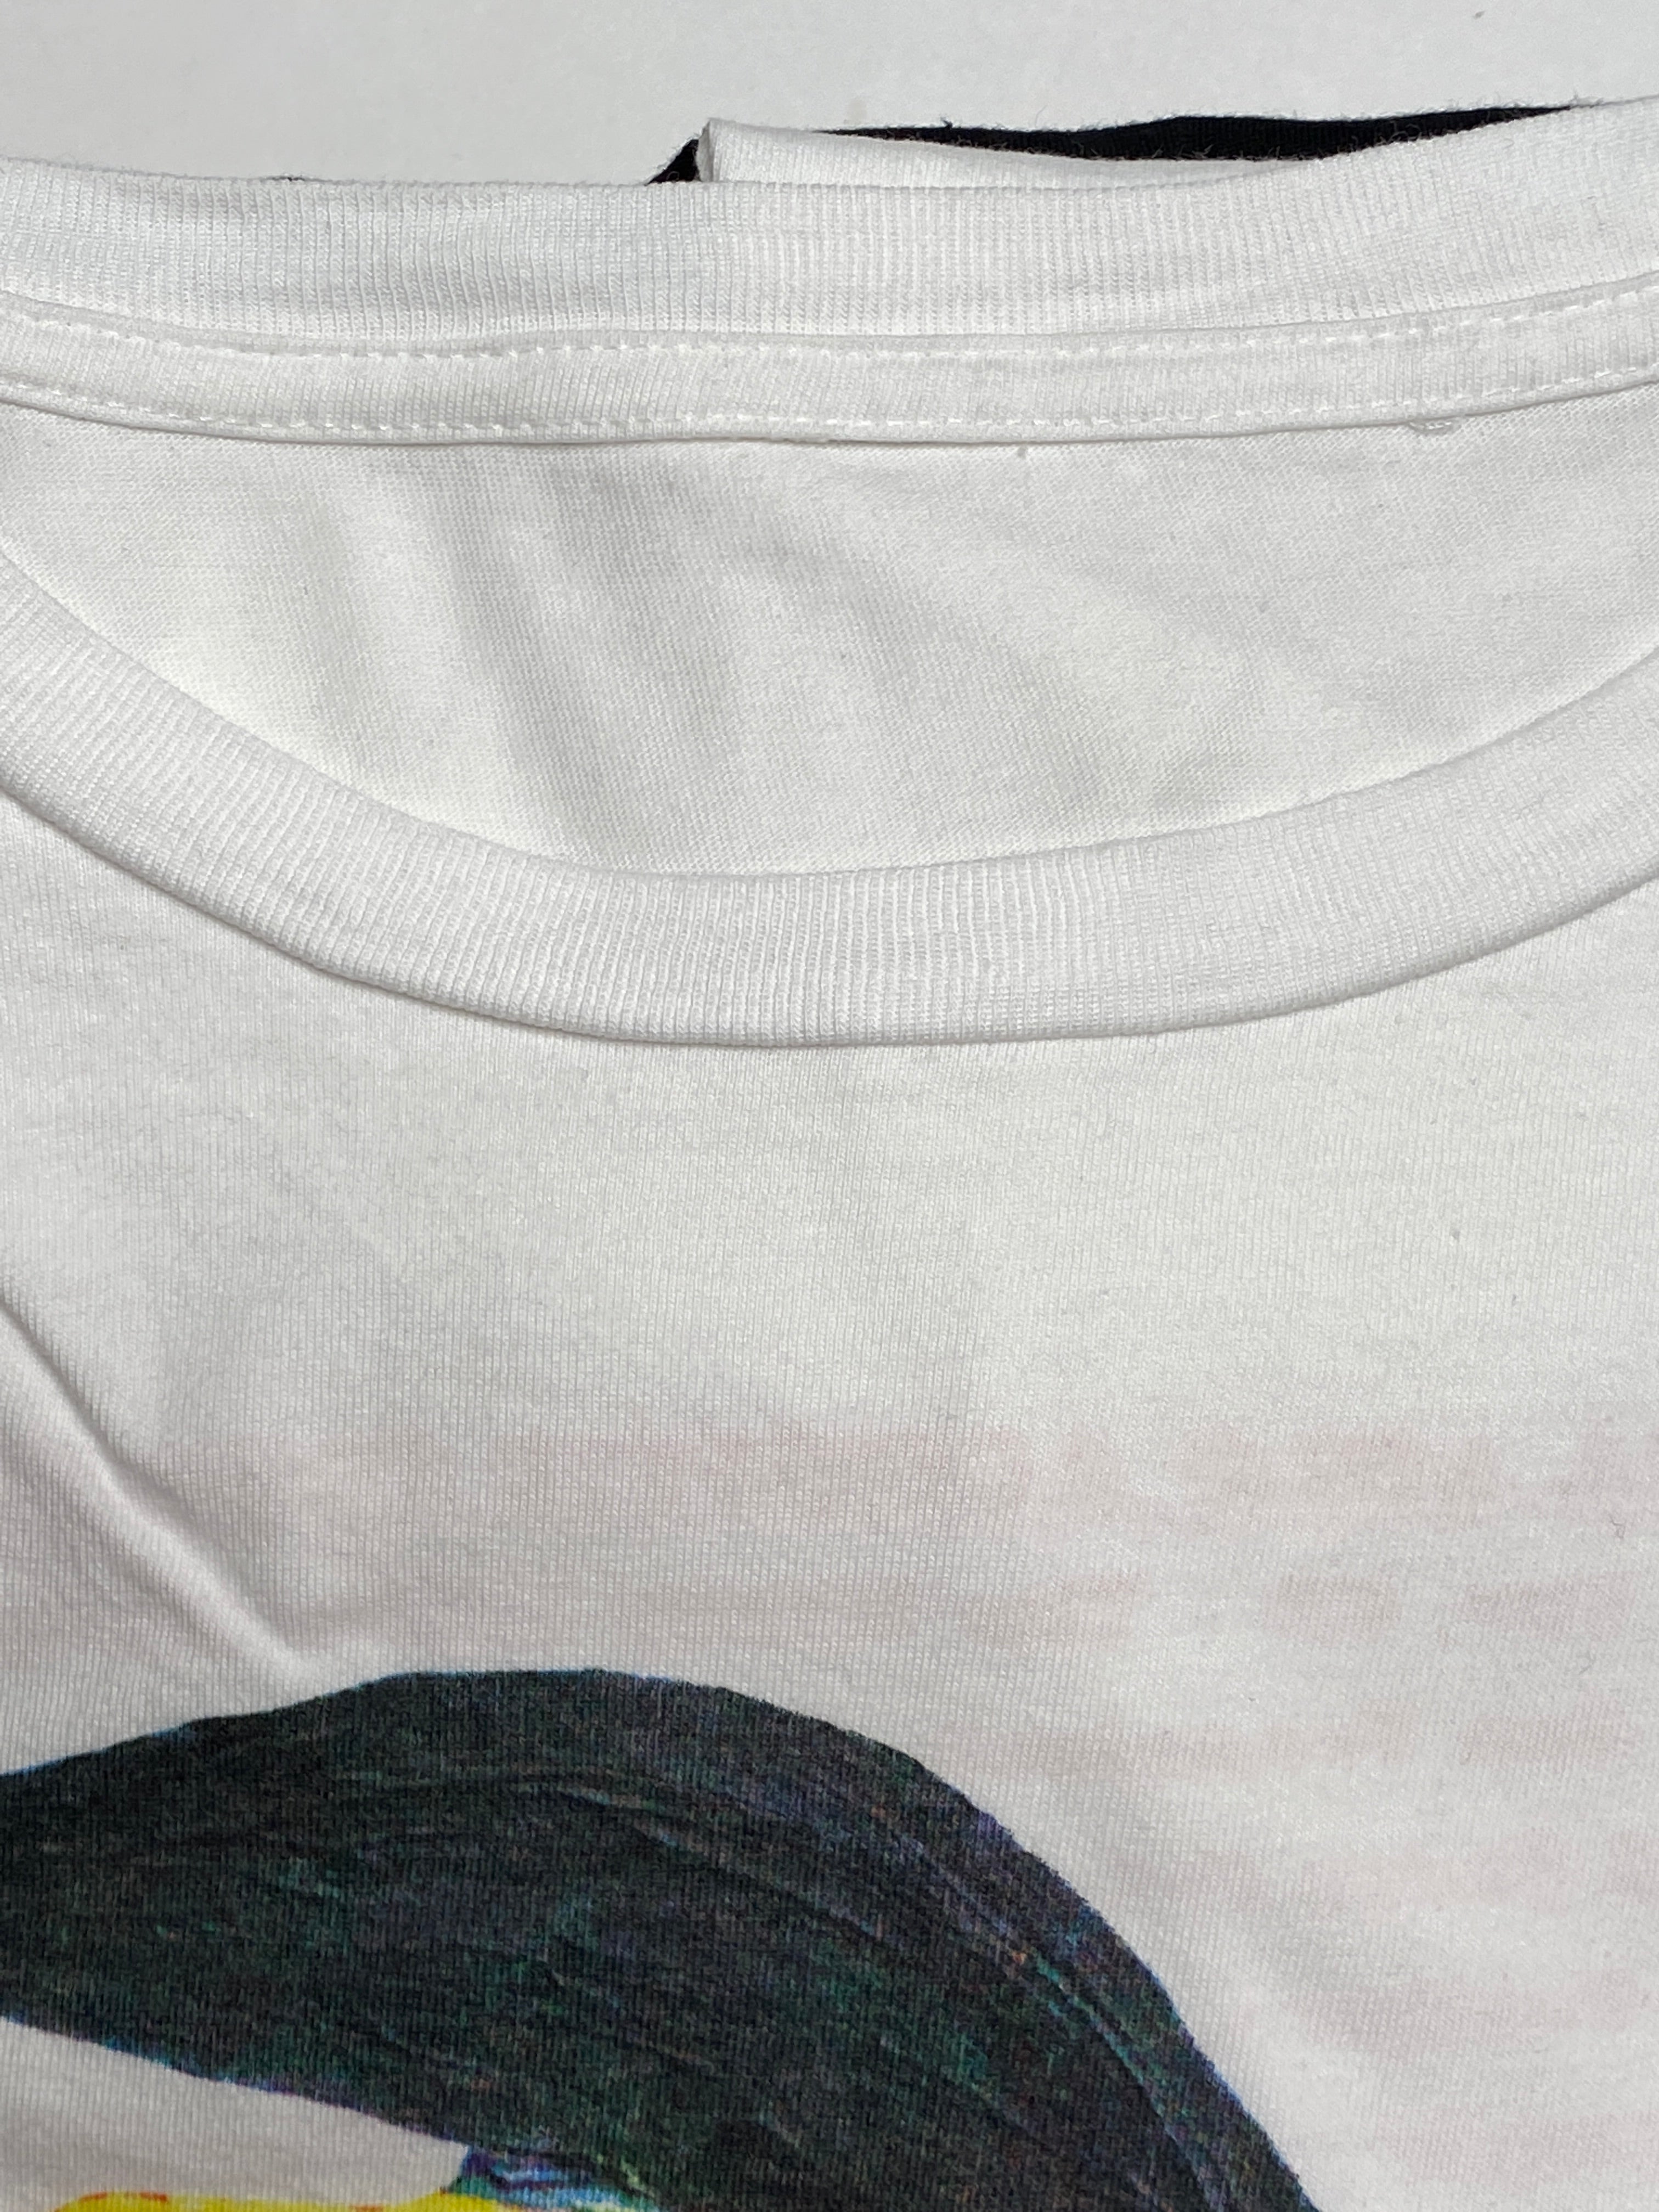 Ty Segall - Solo Acoustic Tour 2018 Tour Shirt Long Sleeve Large